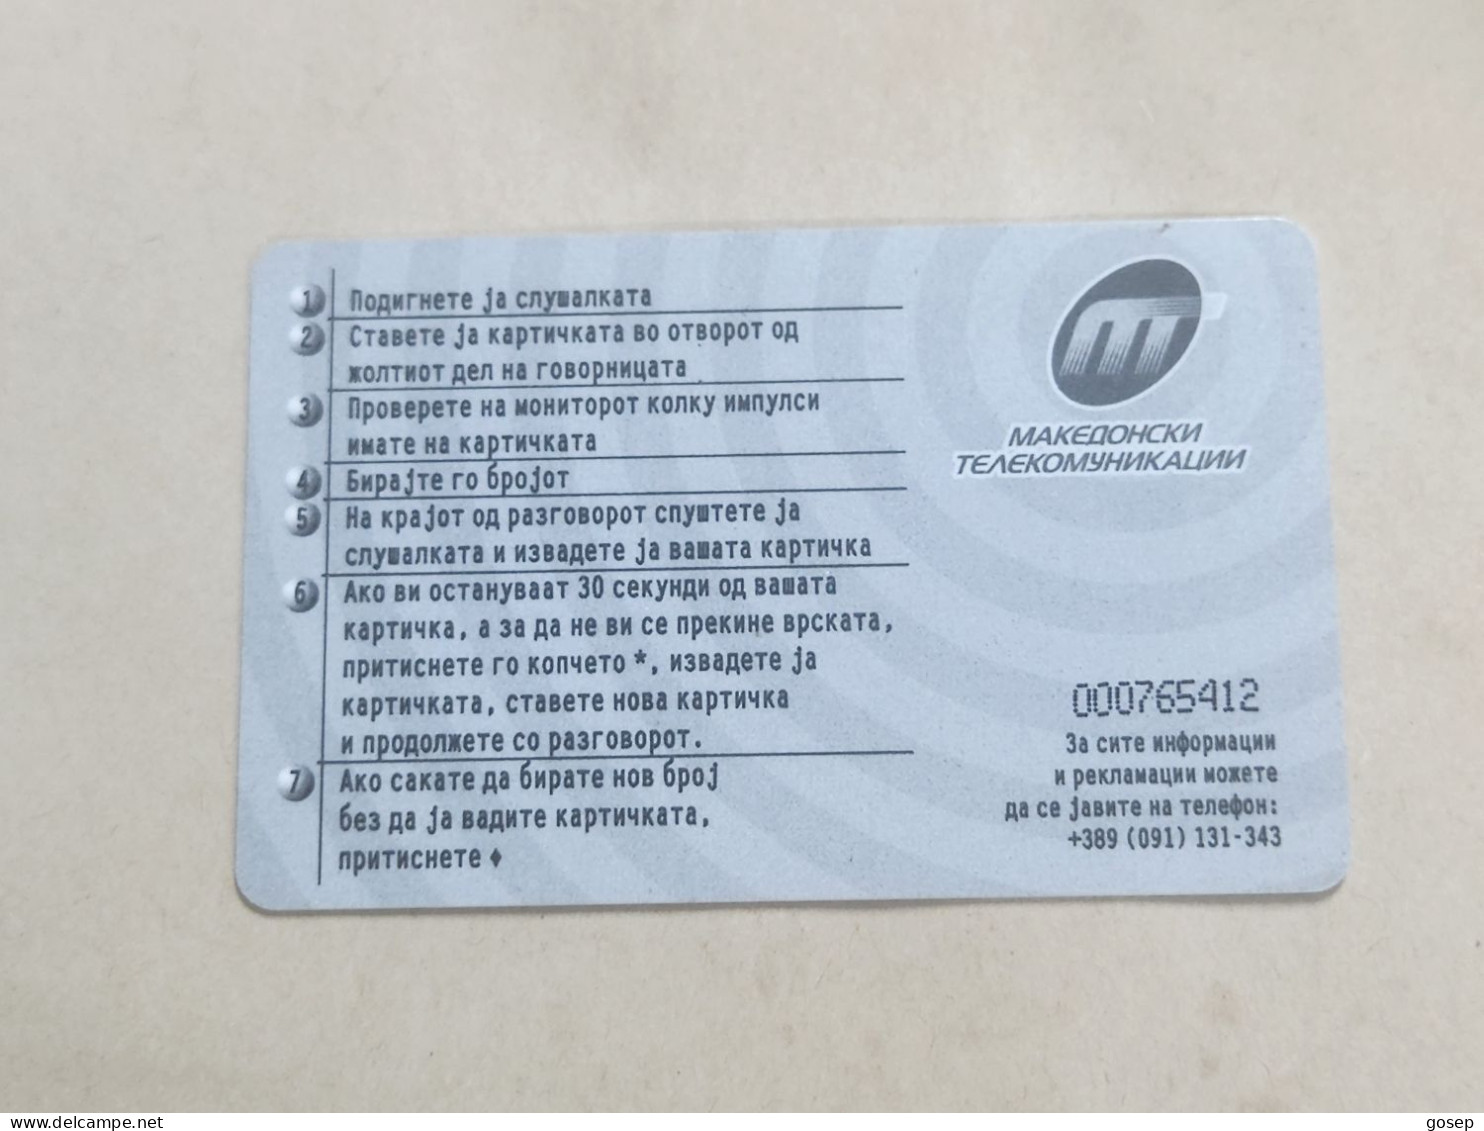 Macedonia-(MK-MAT-0009C)-Butterfly Instructions-(12)-(12/98)-(500units)-(000749104)-tirage-40.000+1card Prepiad Free - Noord-Macedonië